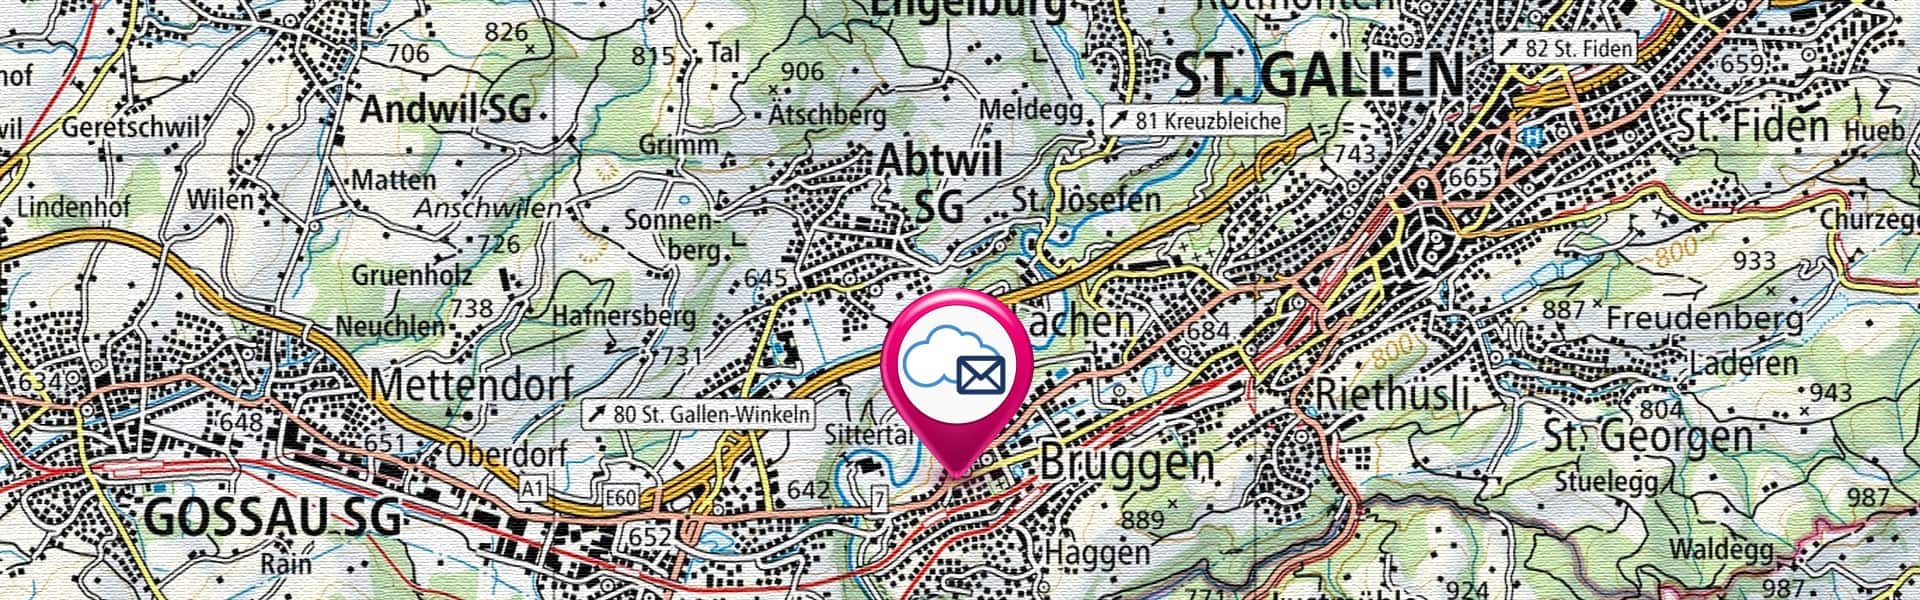 Wolkenpost.ch Kartenausschnitt 9014 St.Gallen 1920x600px